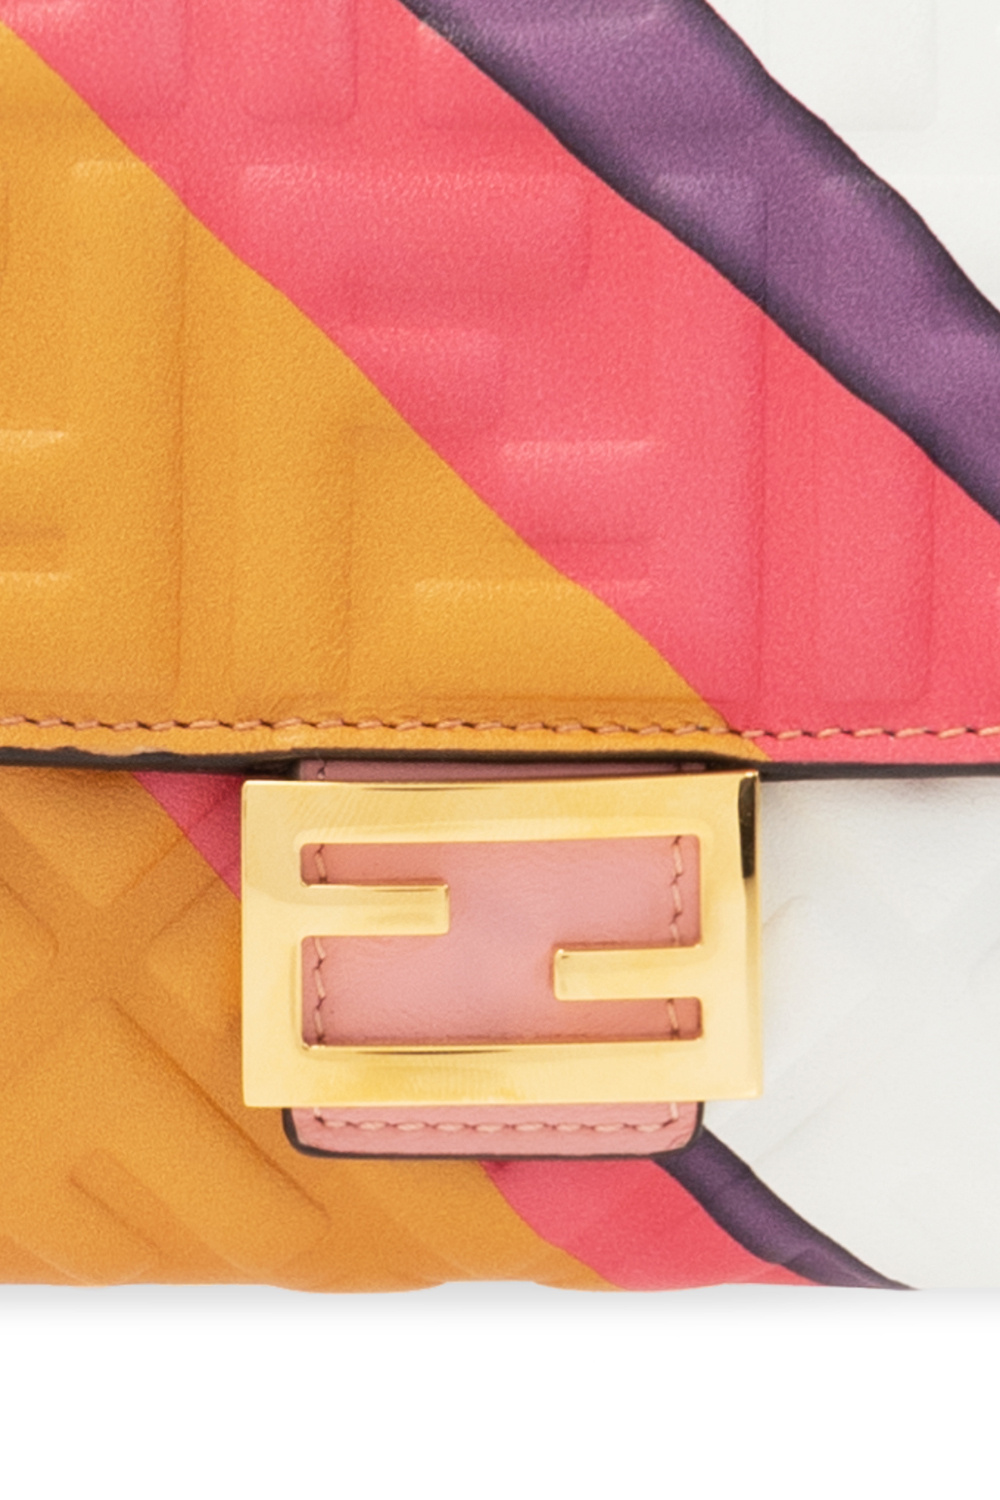 Fendi ‘Baguette Medium’ leather wallet